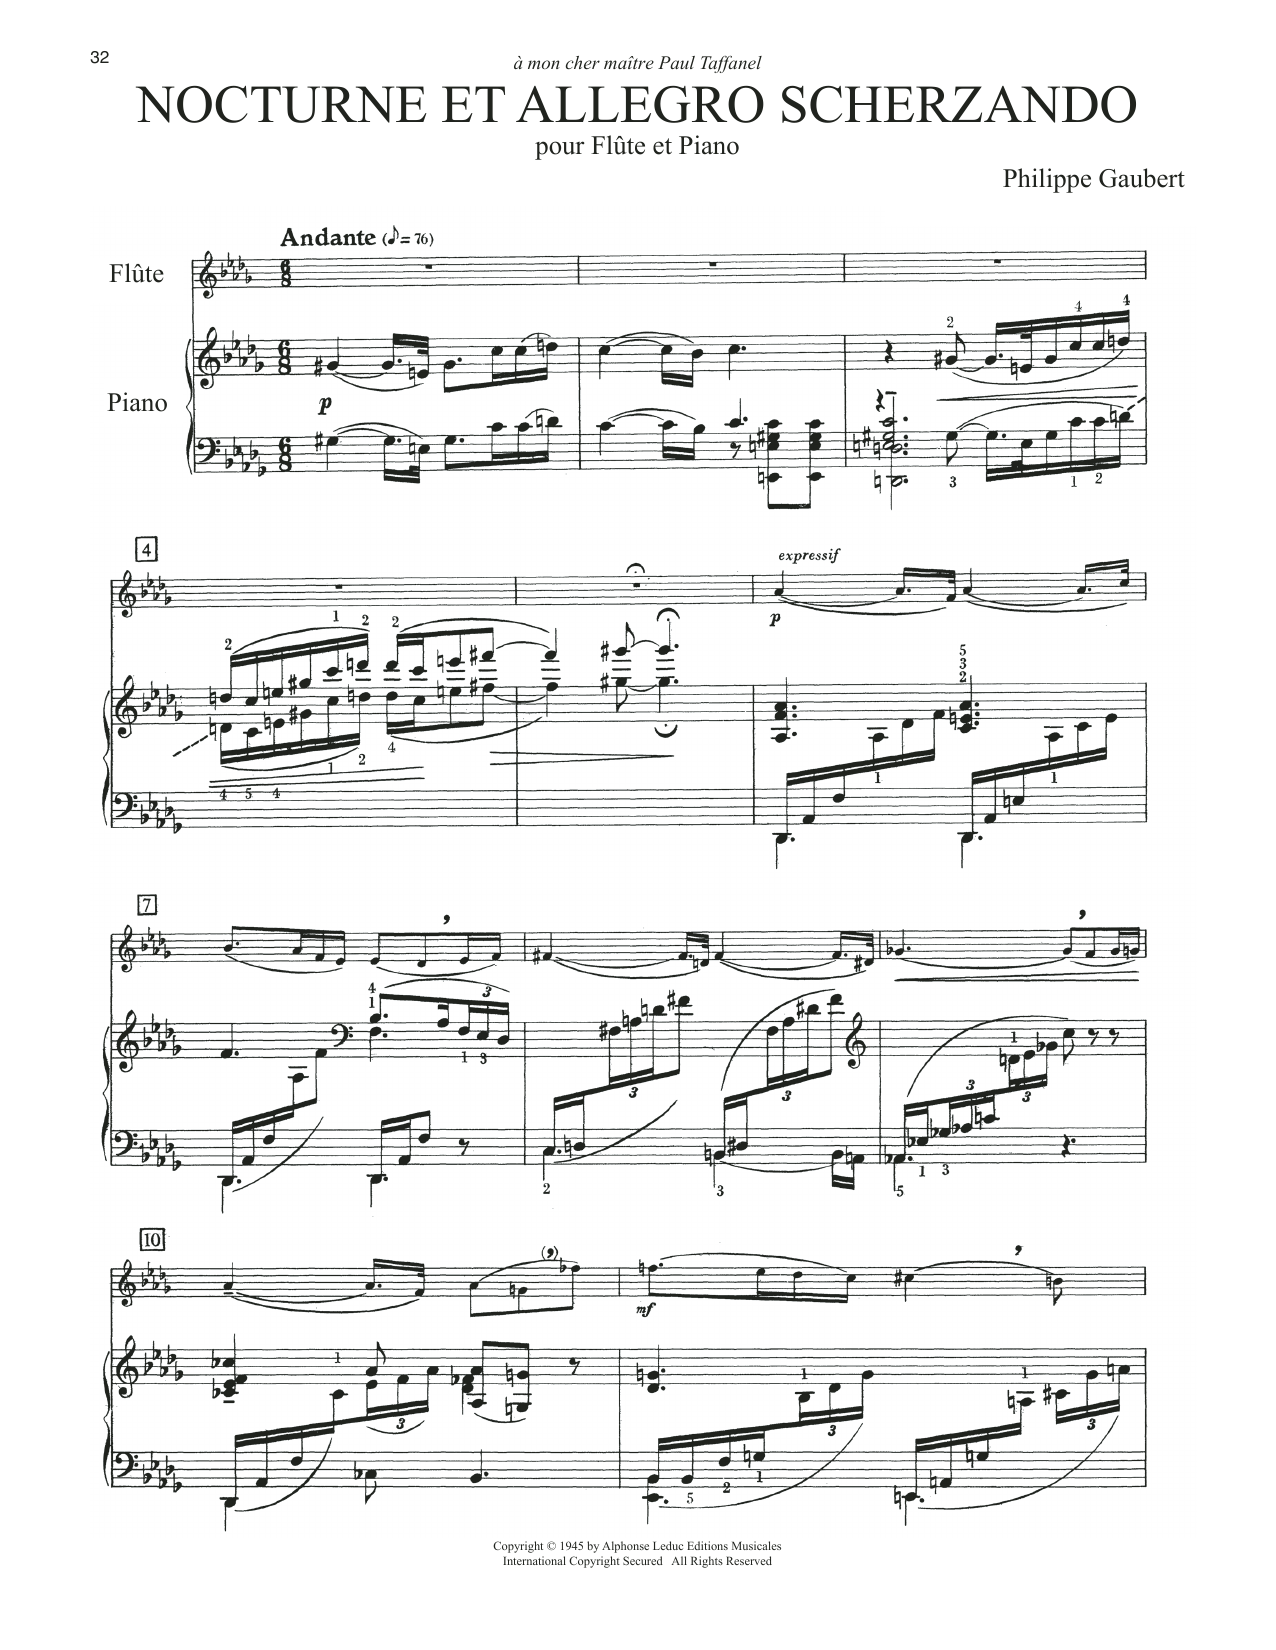 Philippe Gaubert Nocturne Et Allegro Scherzando Sheet Music Notes & Chords for Flute and Piano - Download or Print PDF